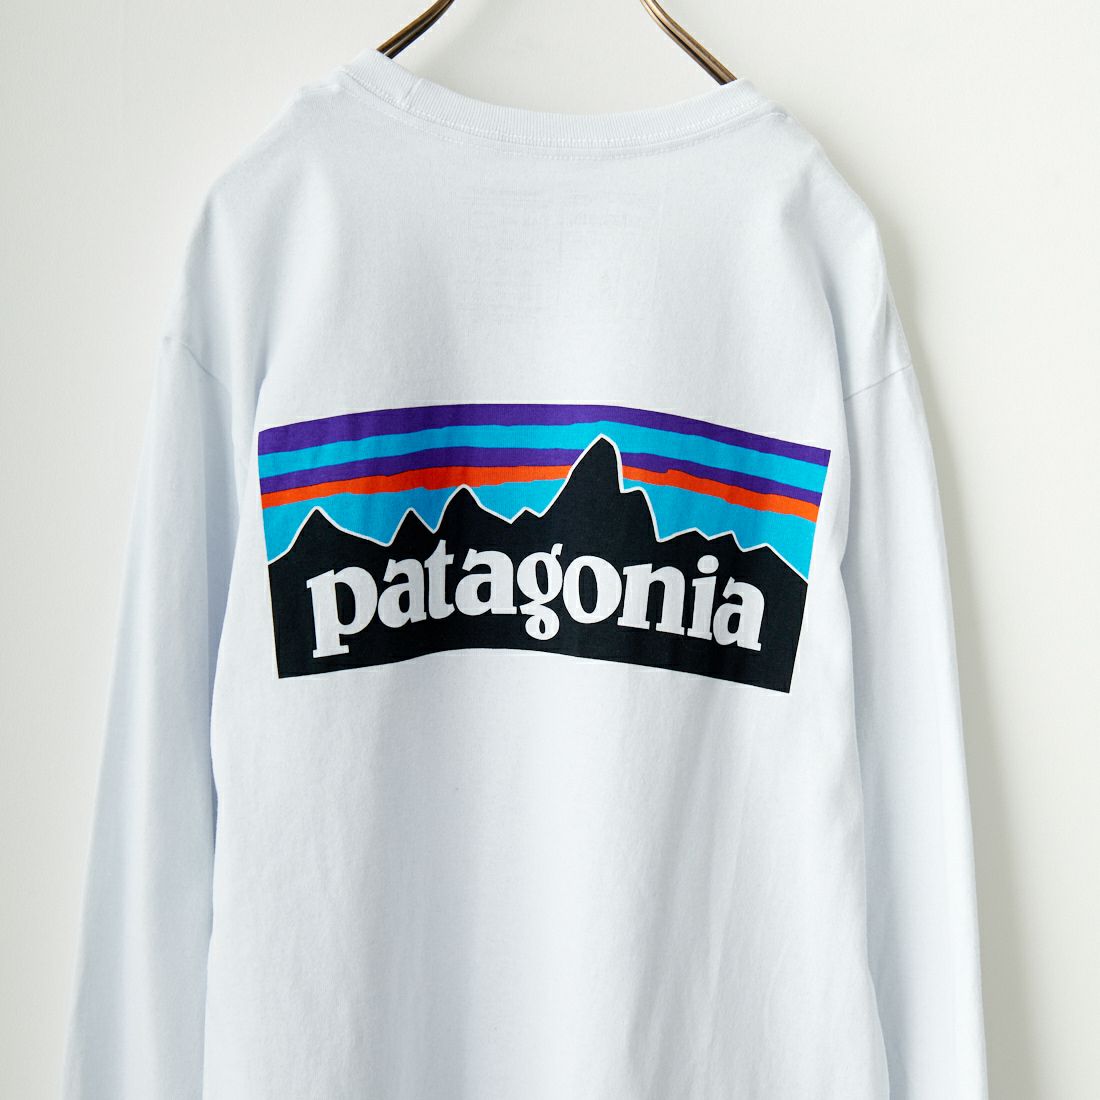 patagonia [パタゴニア] メンズ ロングスリーブ P-6ロゴ レスポンシビリティー [38518] WHI